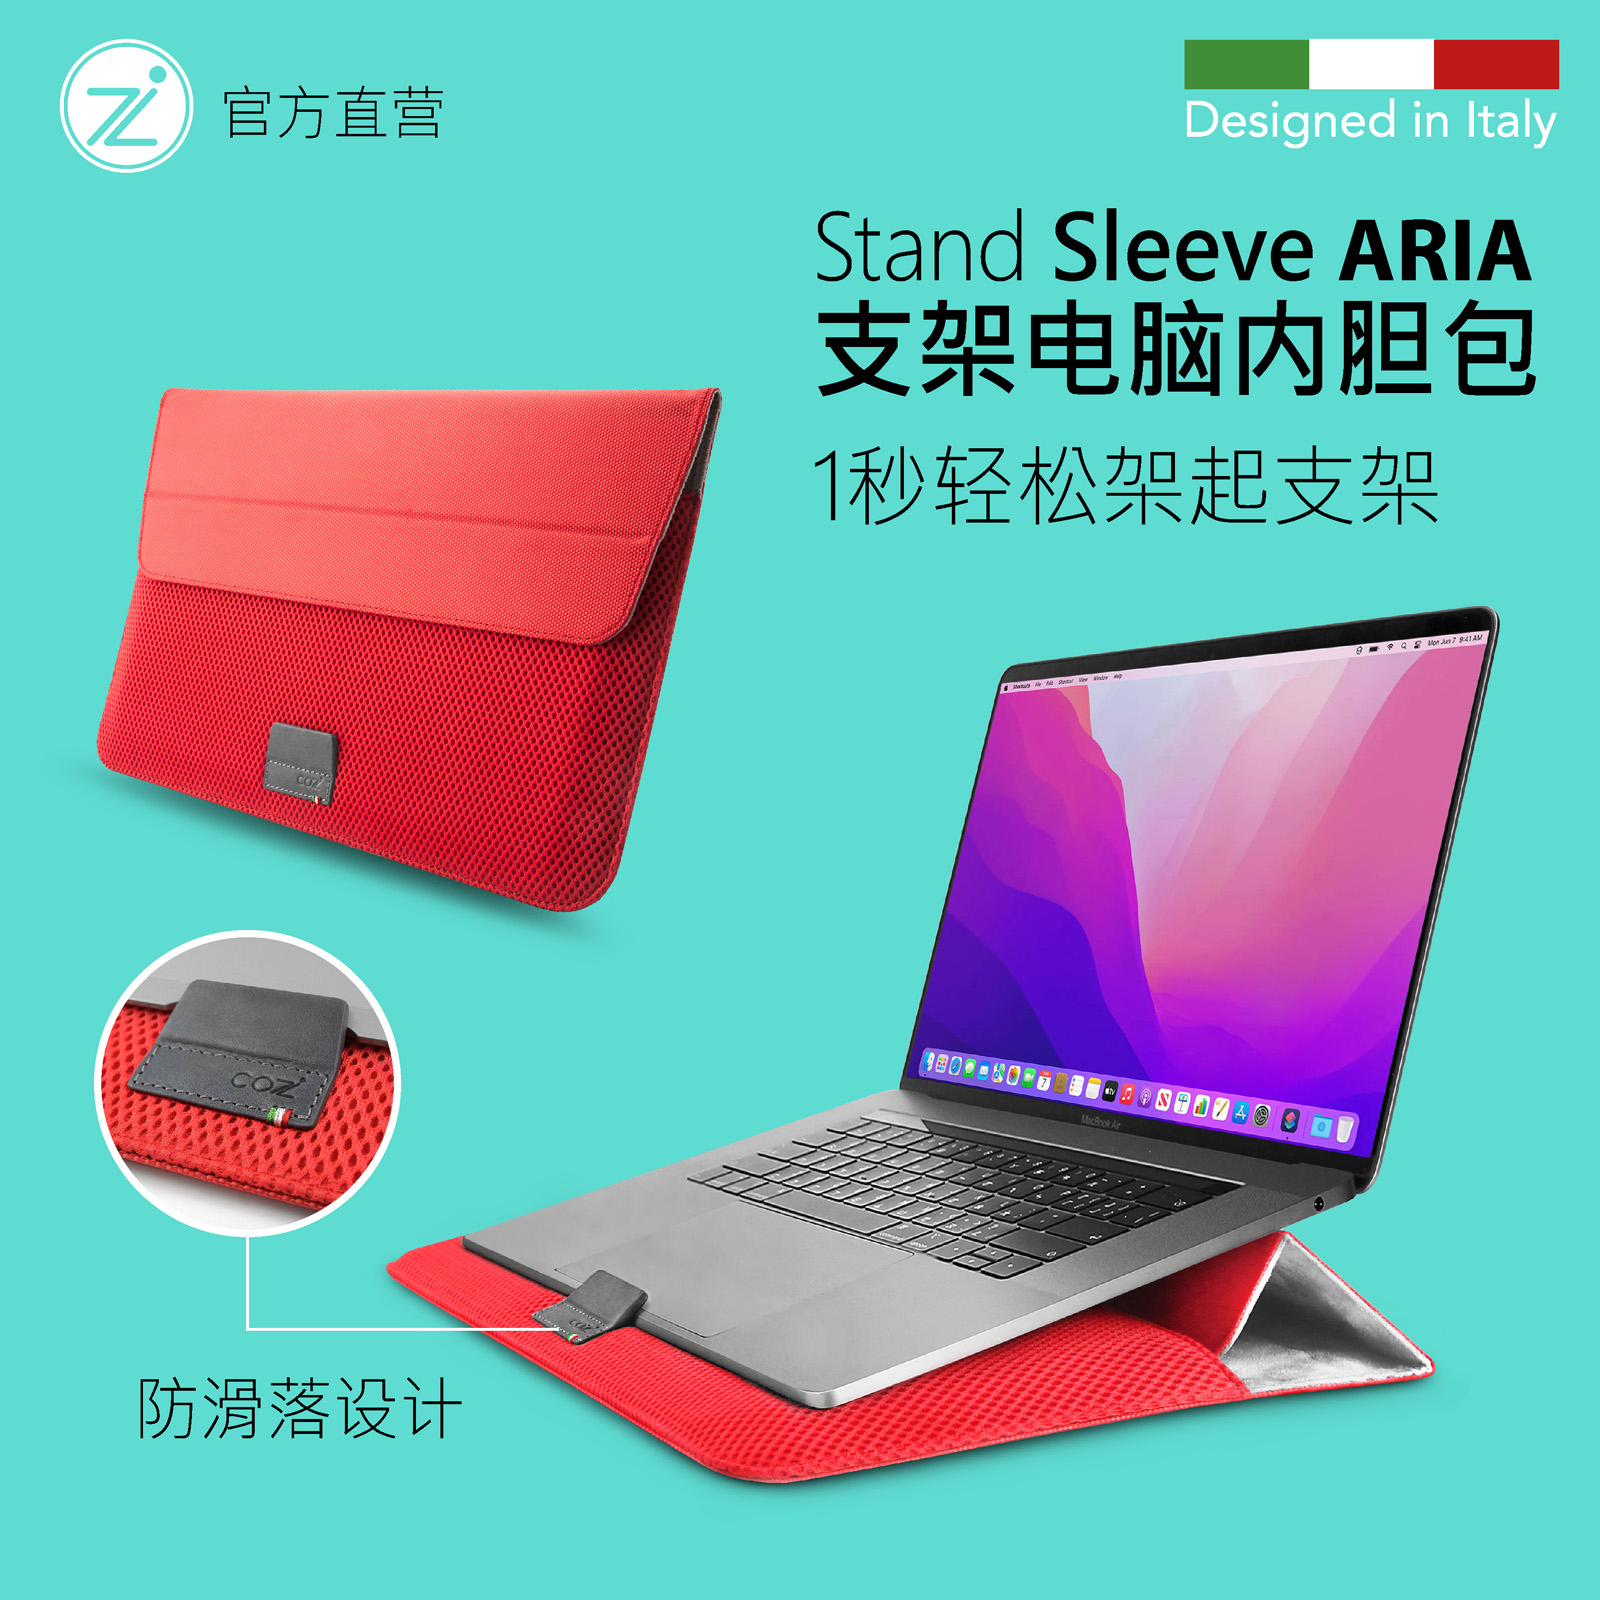 COZI - Stand Sleeve 纤薄 笔记本 支架电脑包 保护套内胆包 - 适用于13-16寸M1 M2 MacBook